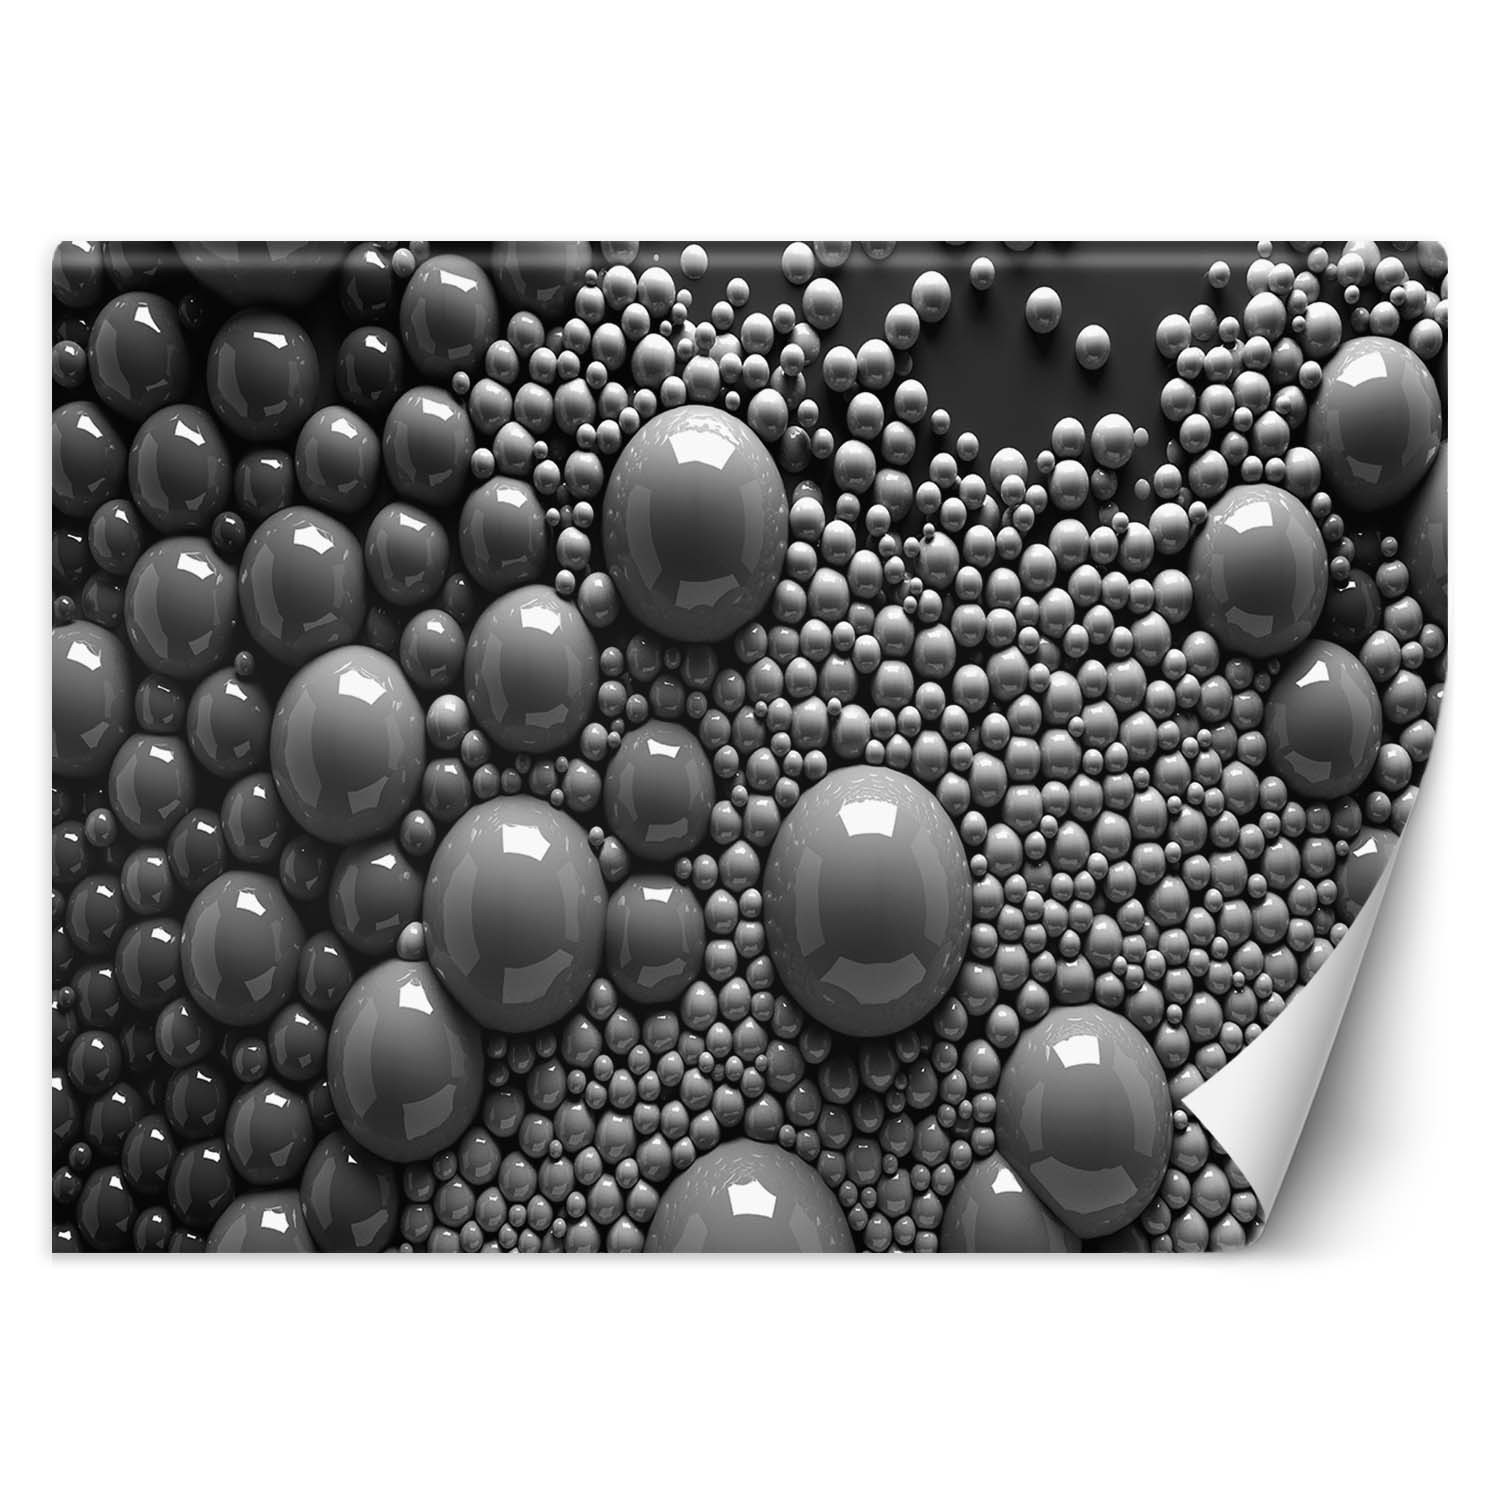 Trend24 – Behang – Abstracte 3D-Bollen – Vliesbehang – Fotobehang 3D – Behang Woonkamer – 450x315x2 cm – Incl. behanglijm